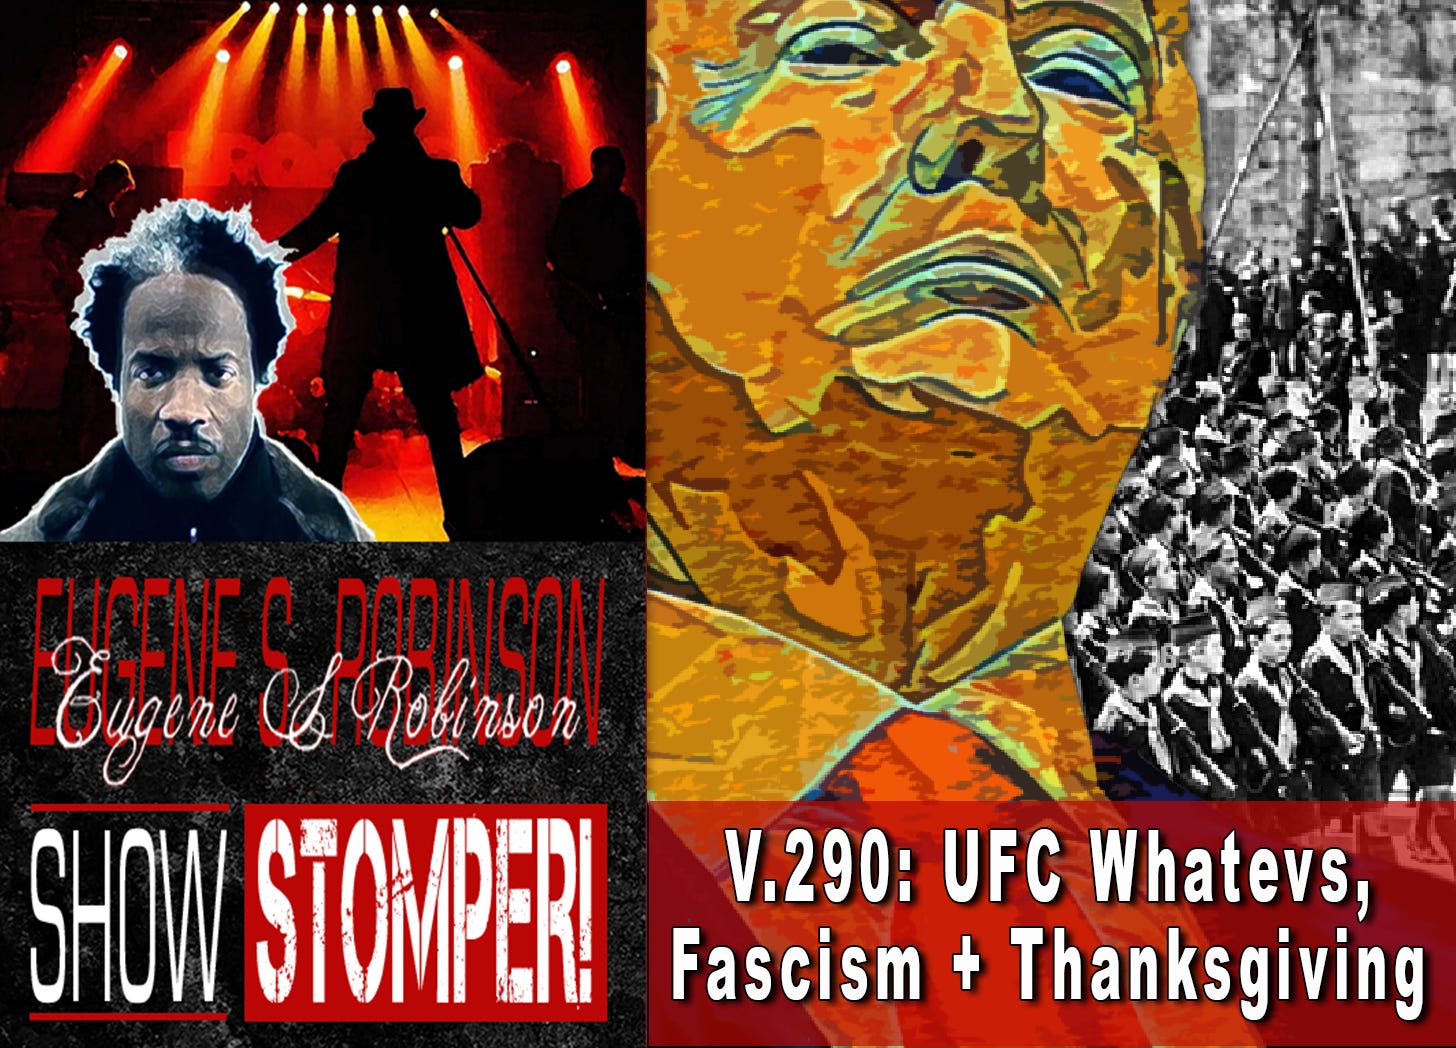 V.290: UFC Whatevs, Fascism + Thanksgiving On The Eugene S. Robinson Show Stomper!